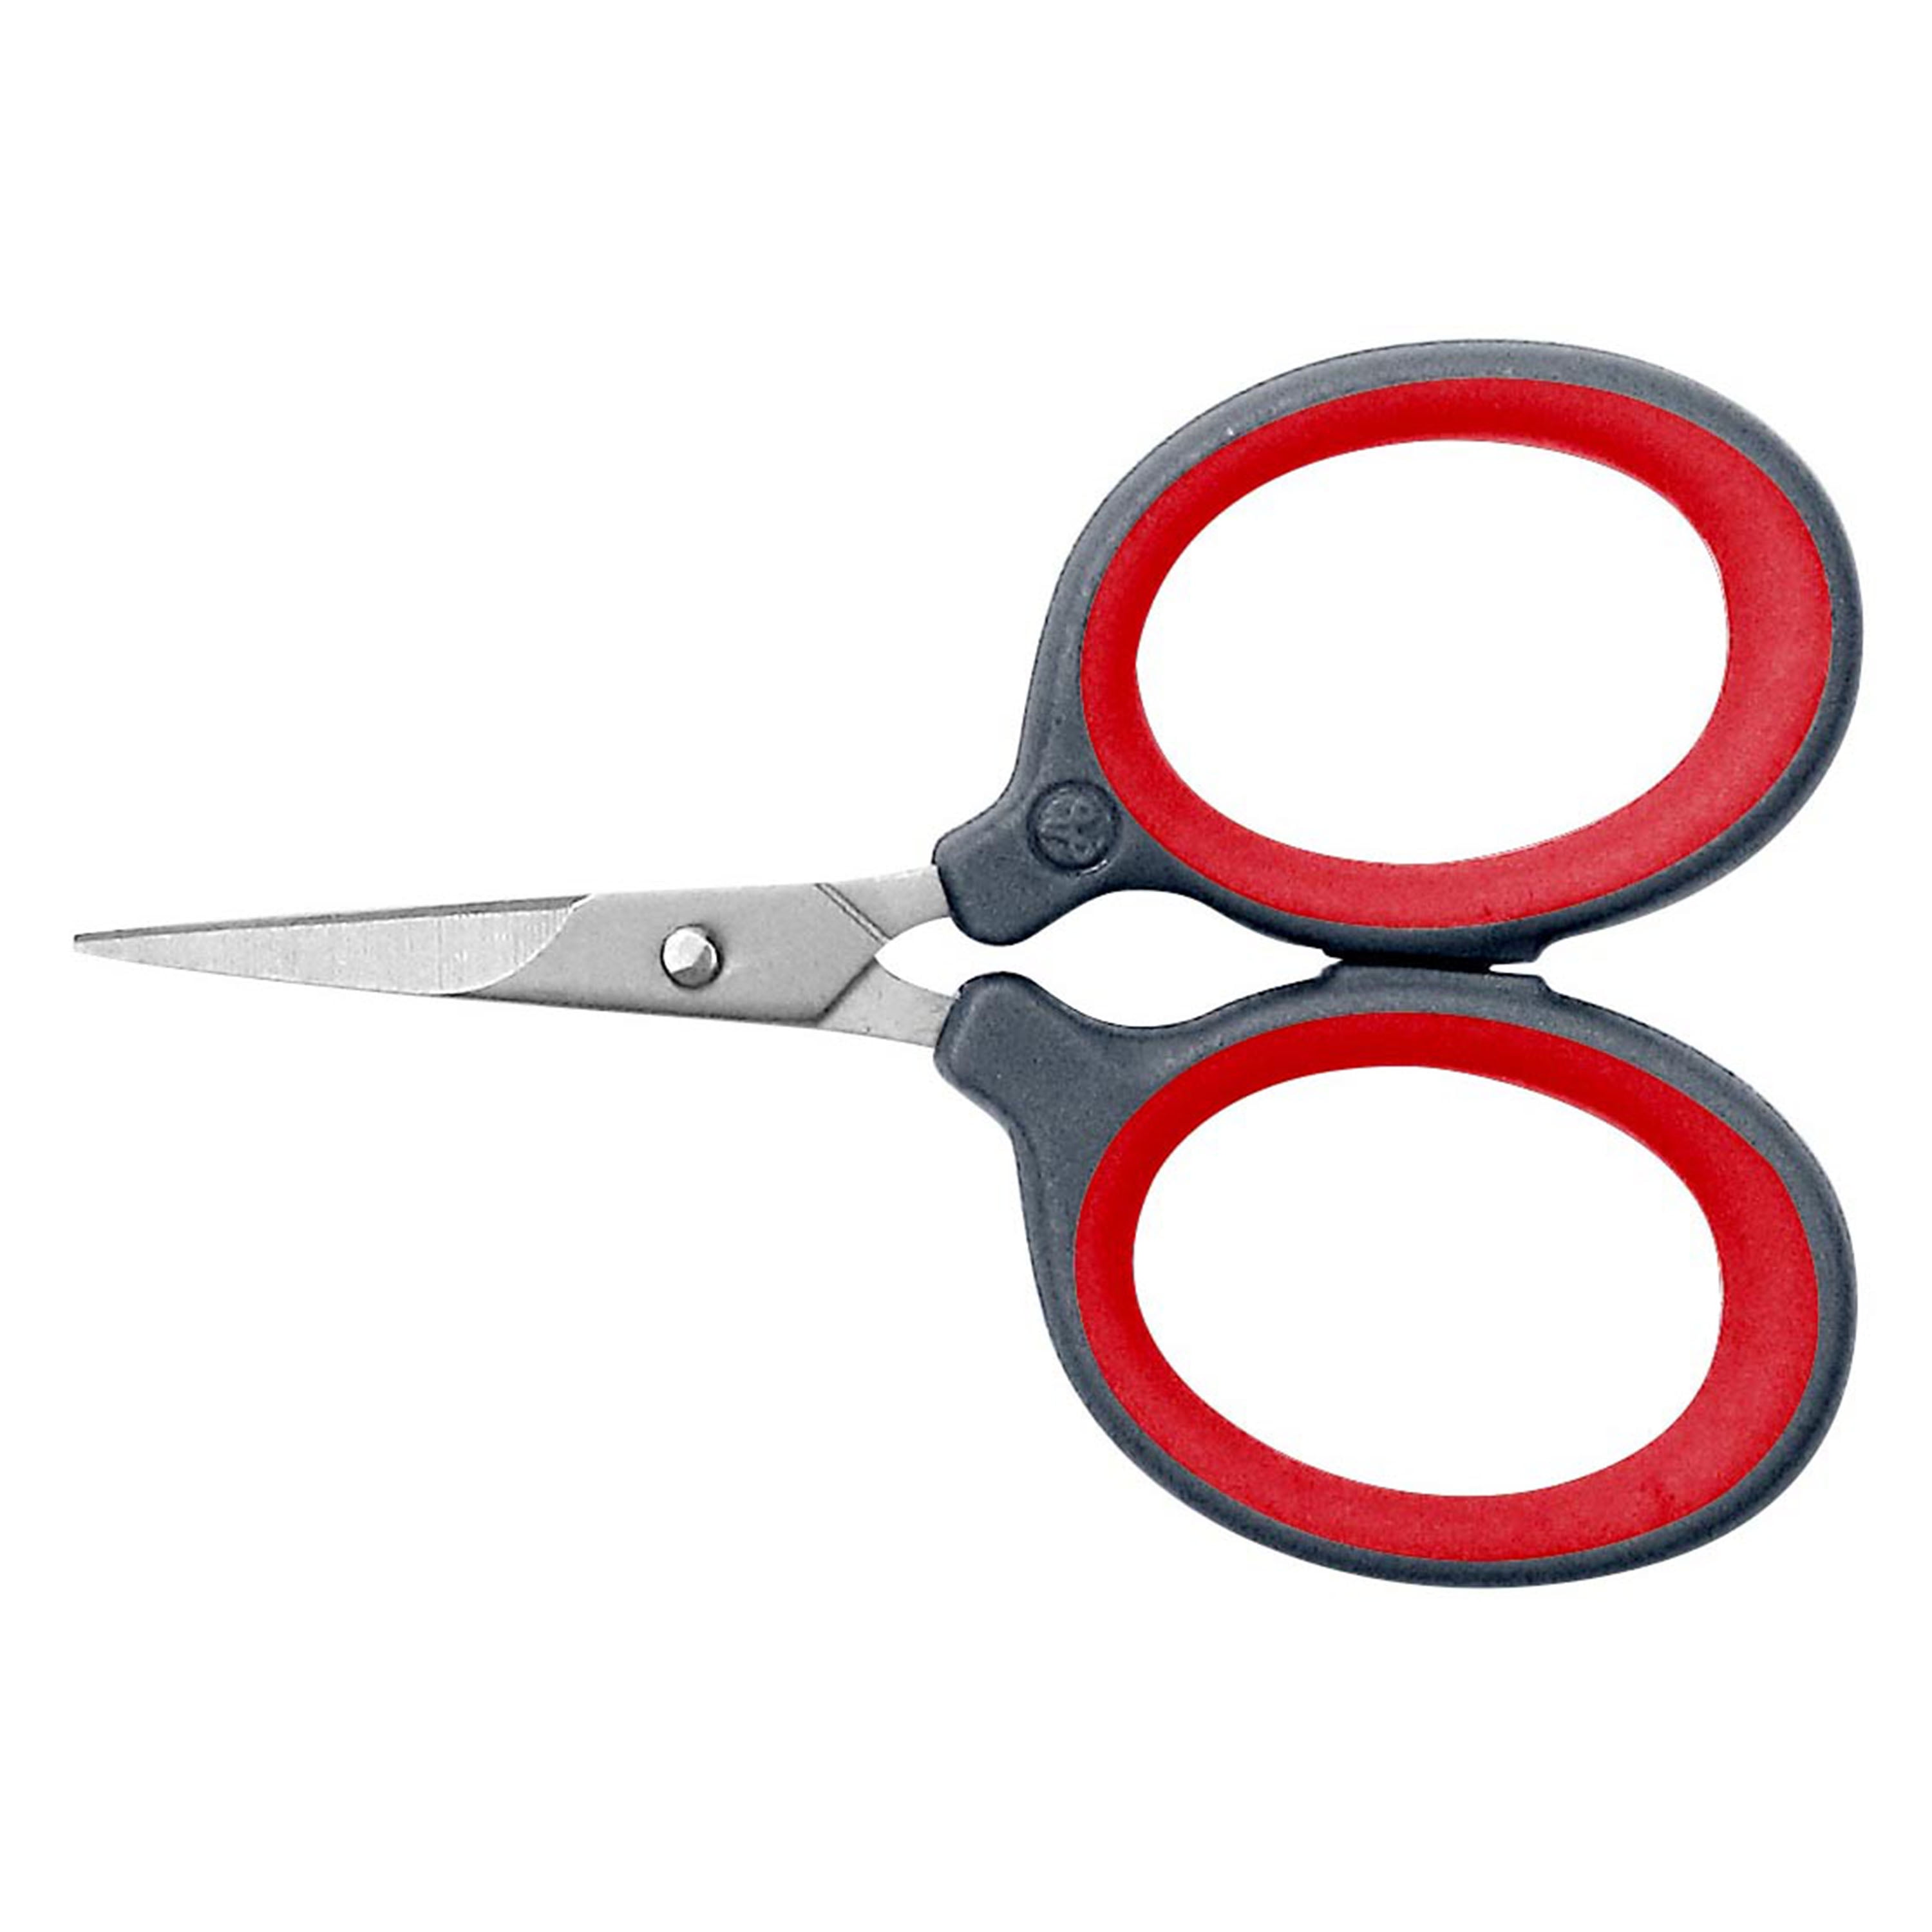 Extra fine cutter blades - Scissors & cutting - LDLC 3-year